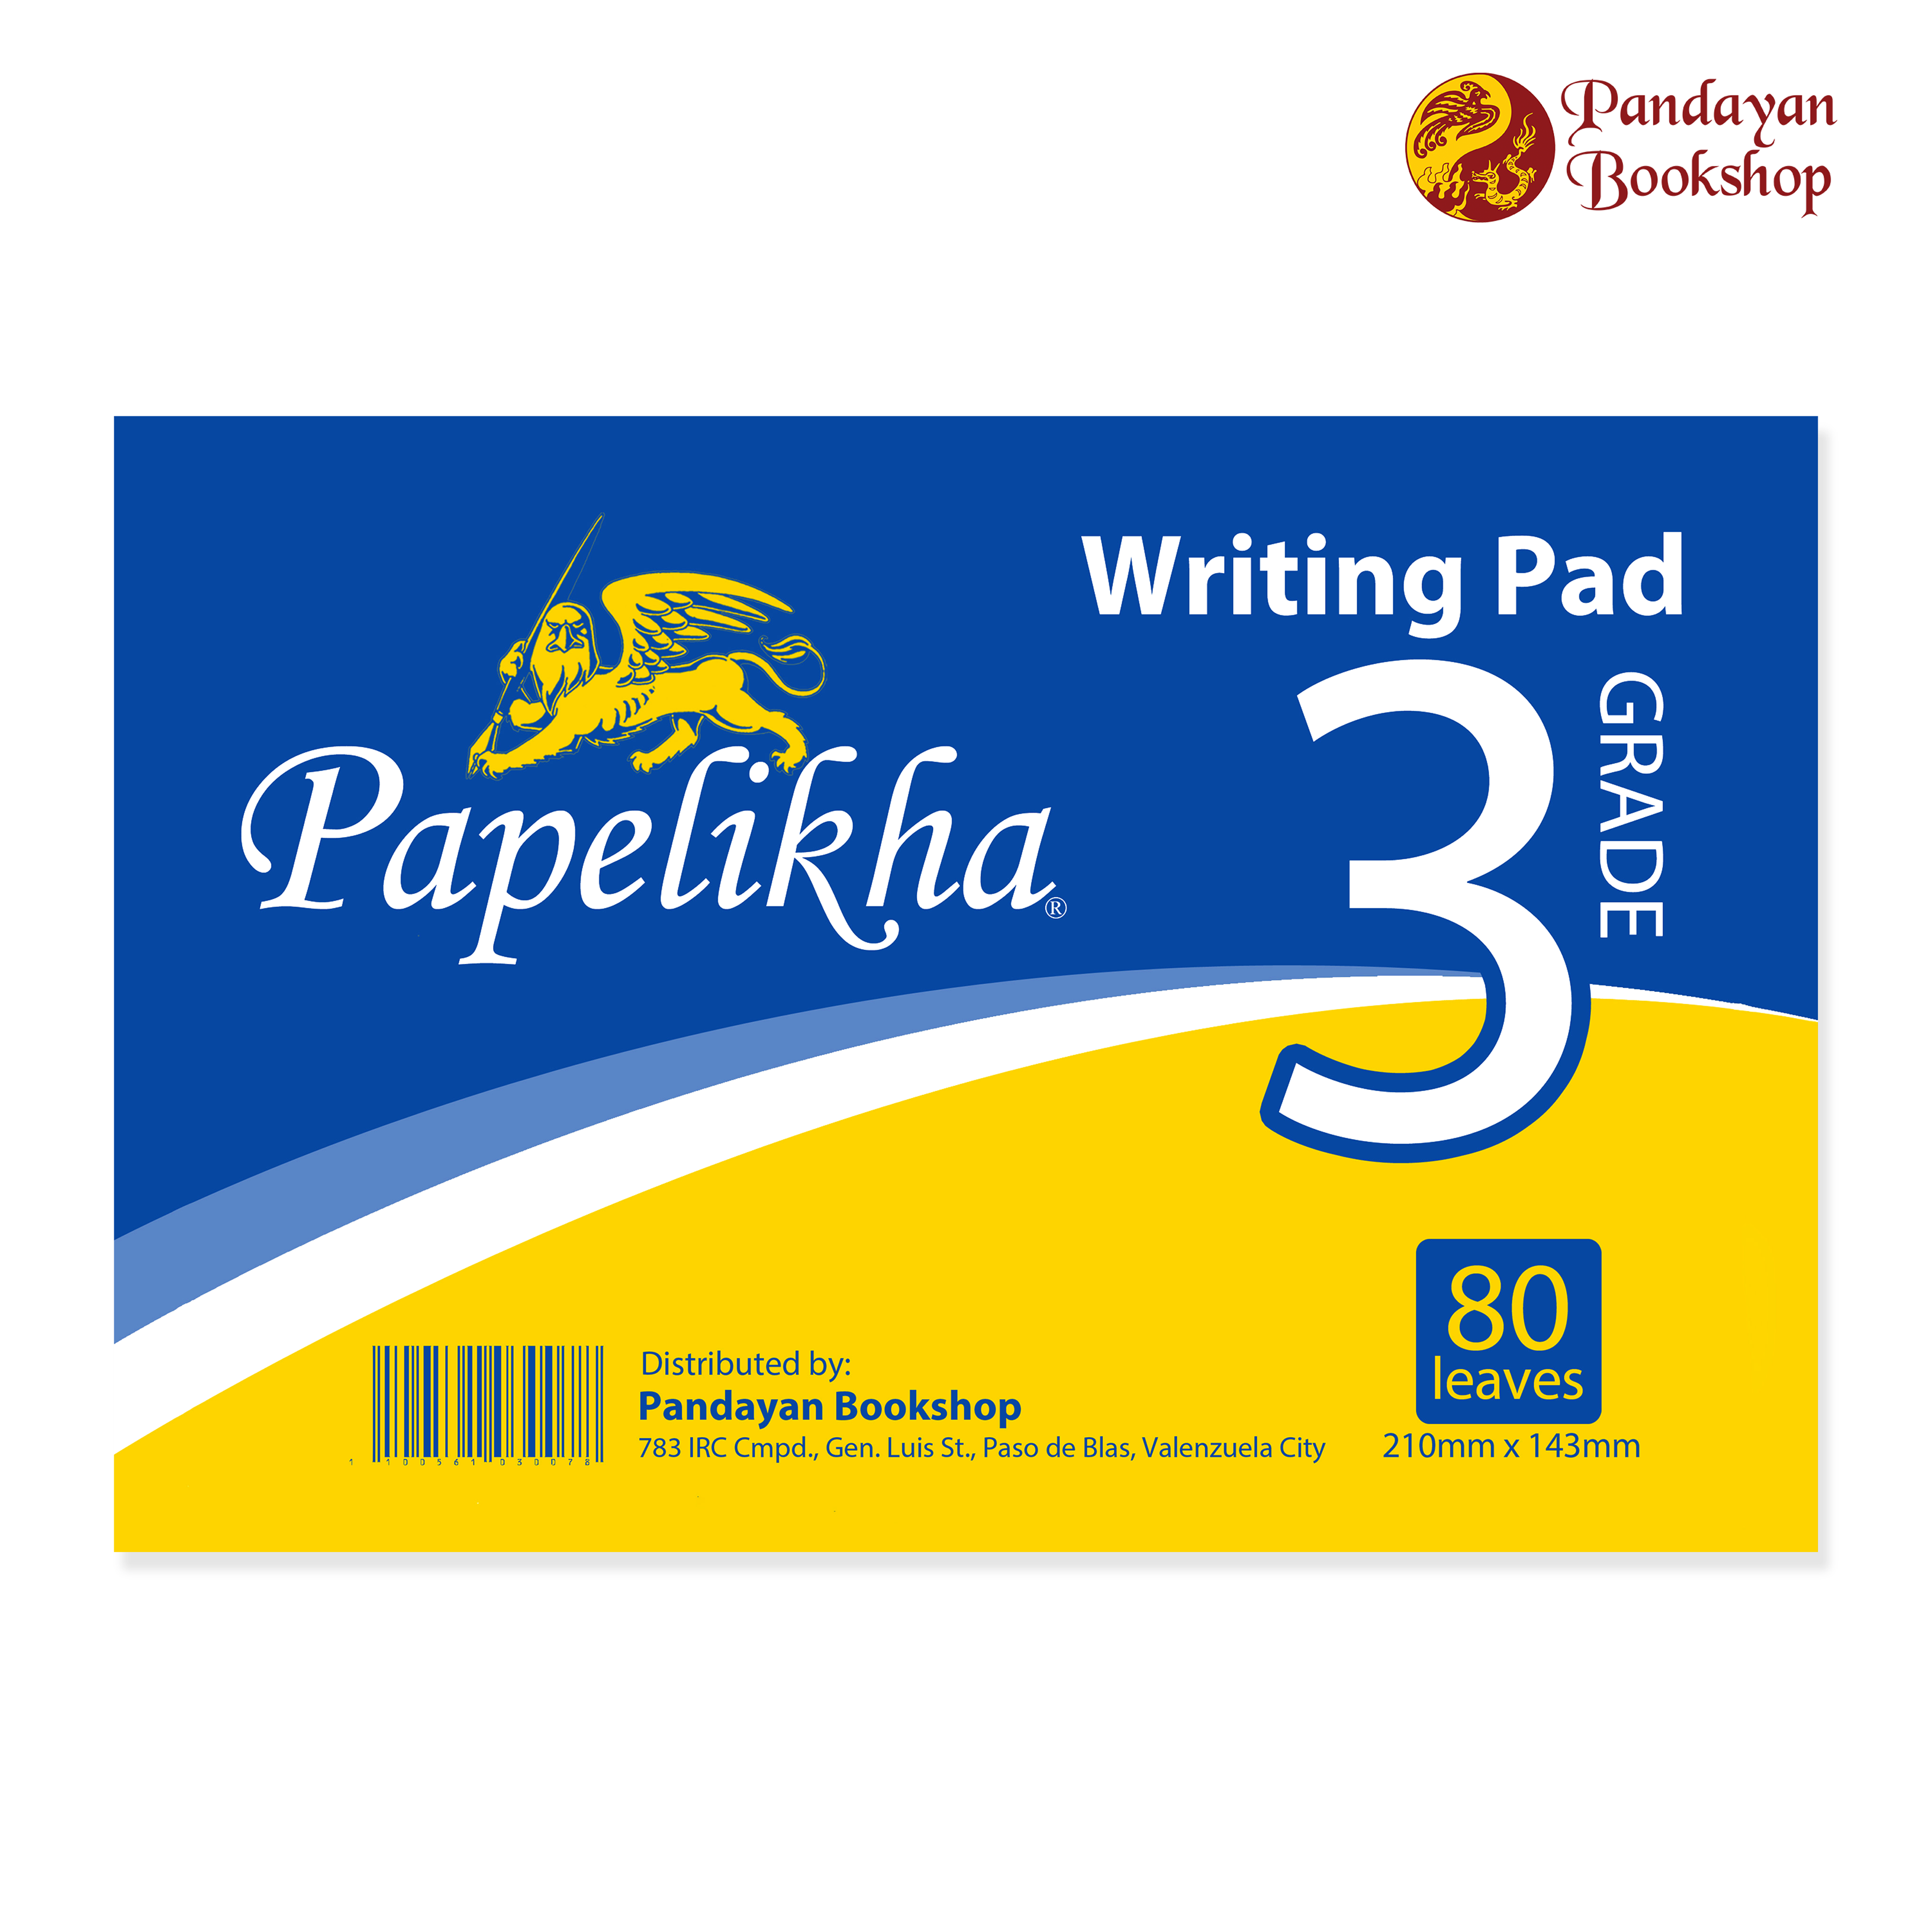 Papelikha Grade 3 Writing Pad 3s 80 leaves